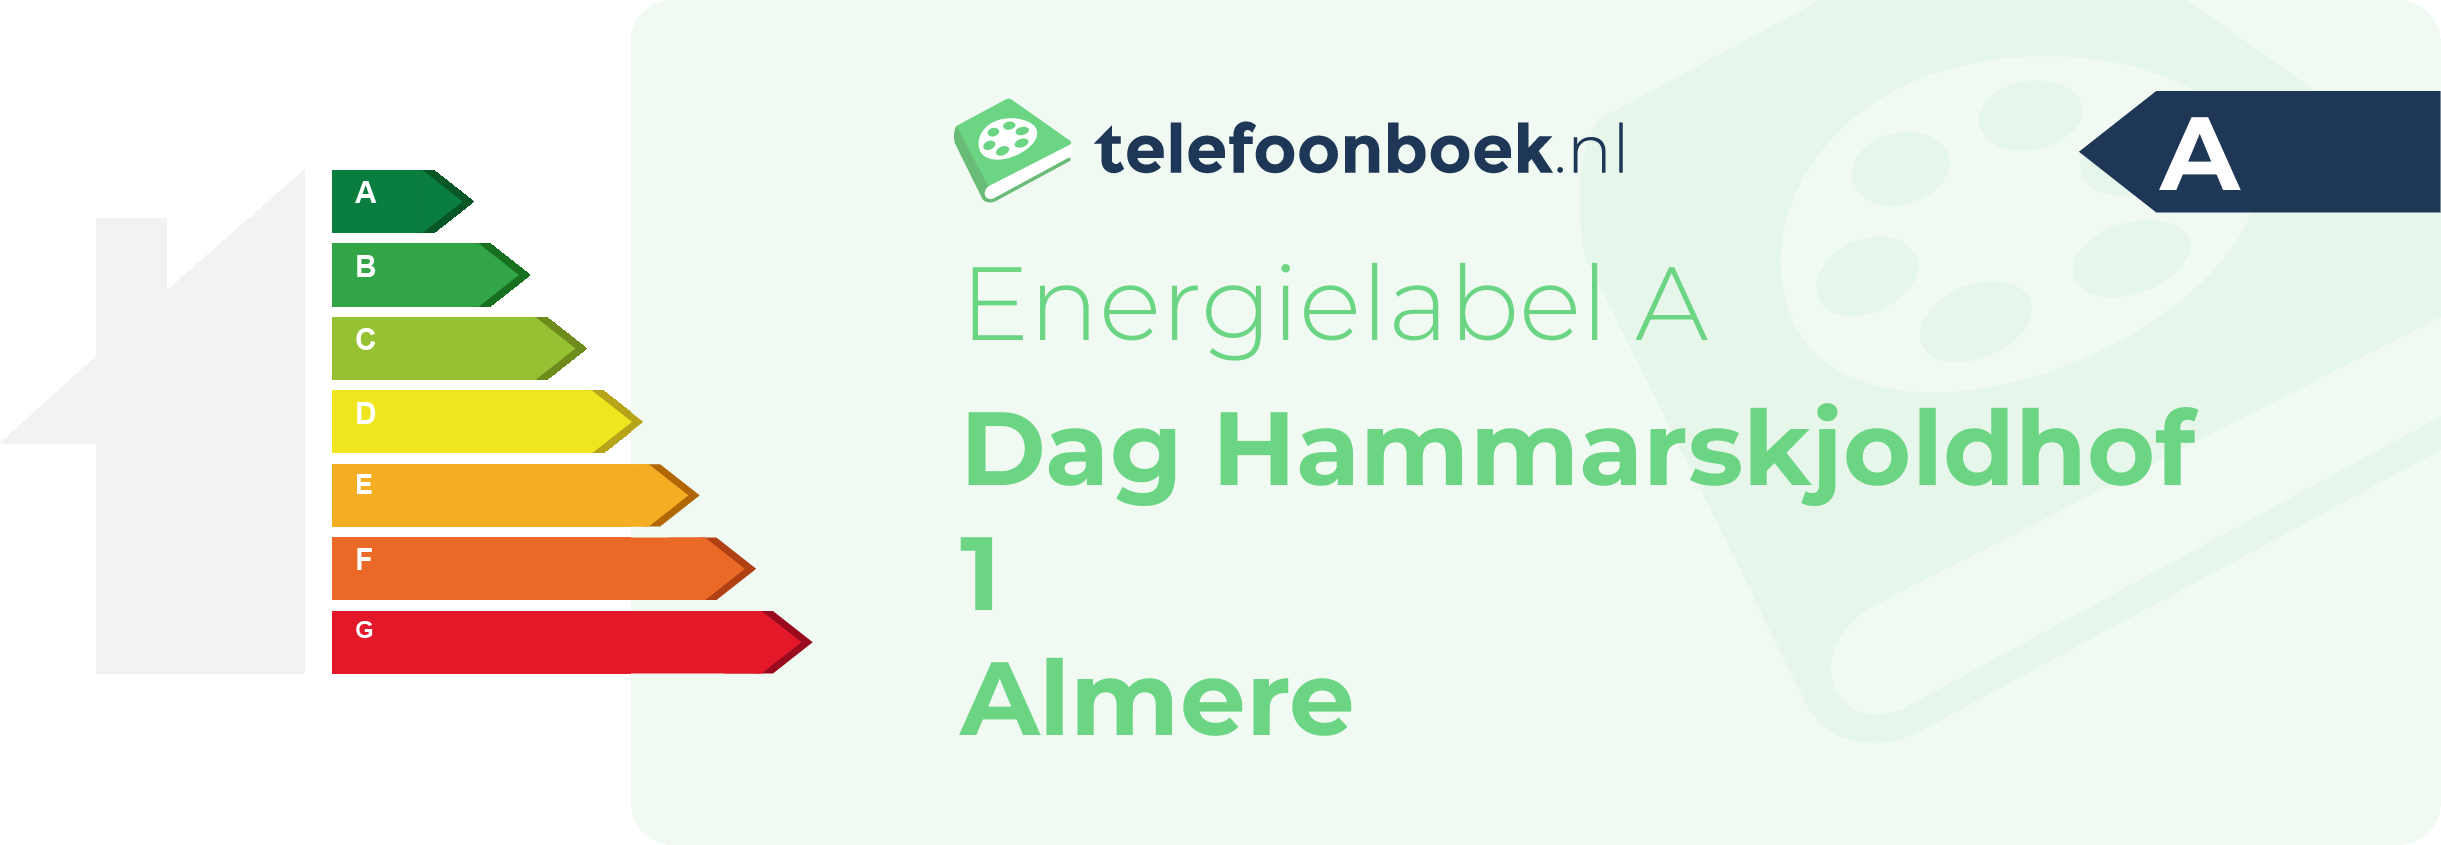 Energielabel Dag Hammarskjoldhof 1 Almere